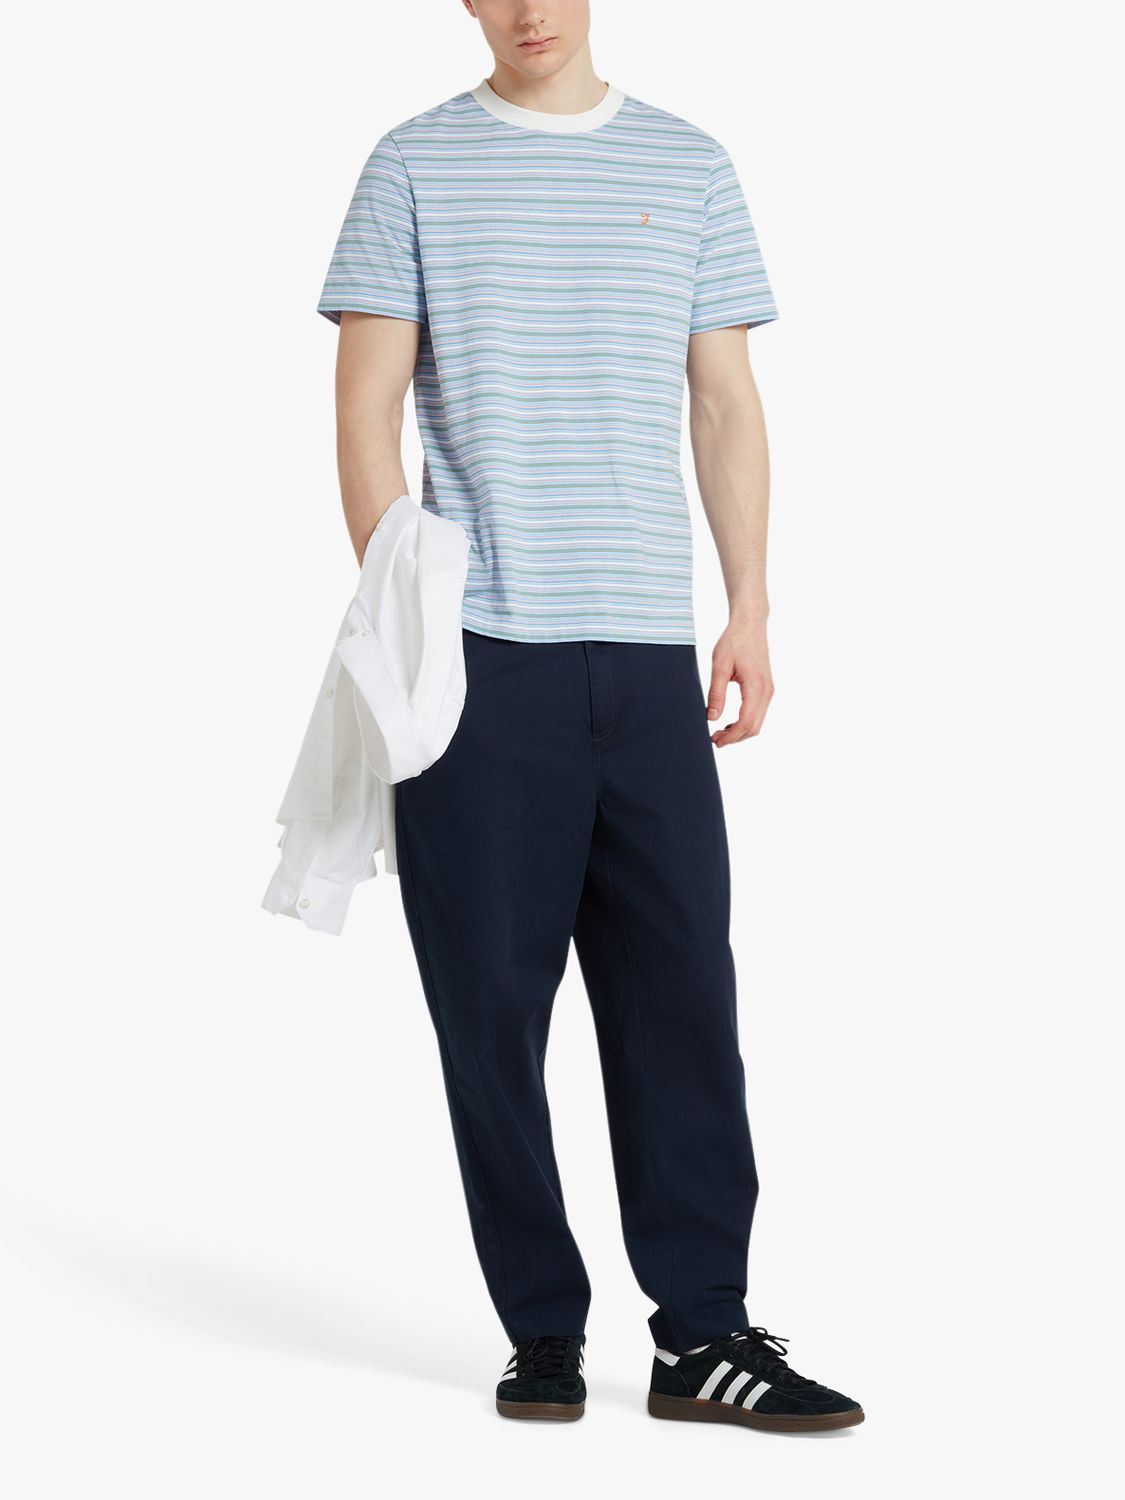 Farah Danny Stripe Regular Fit Organic Cotton T-Shirt, Arctic Blue, L